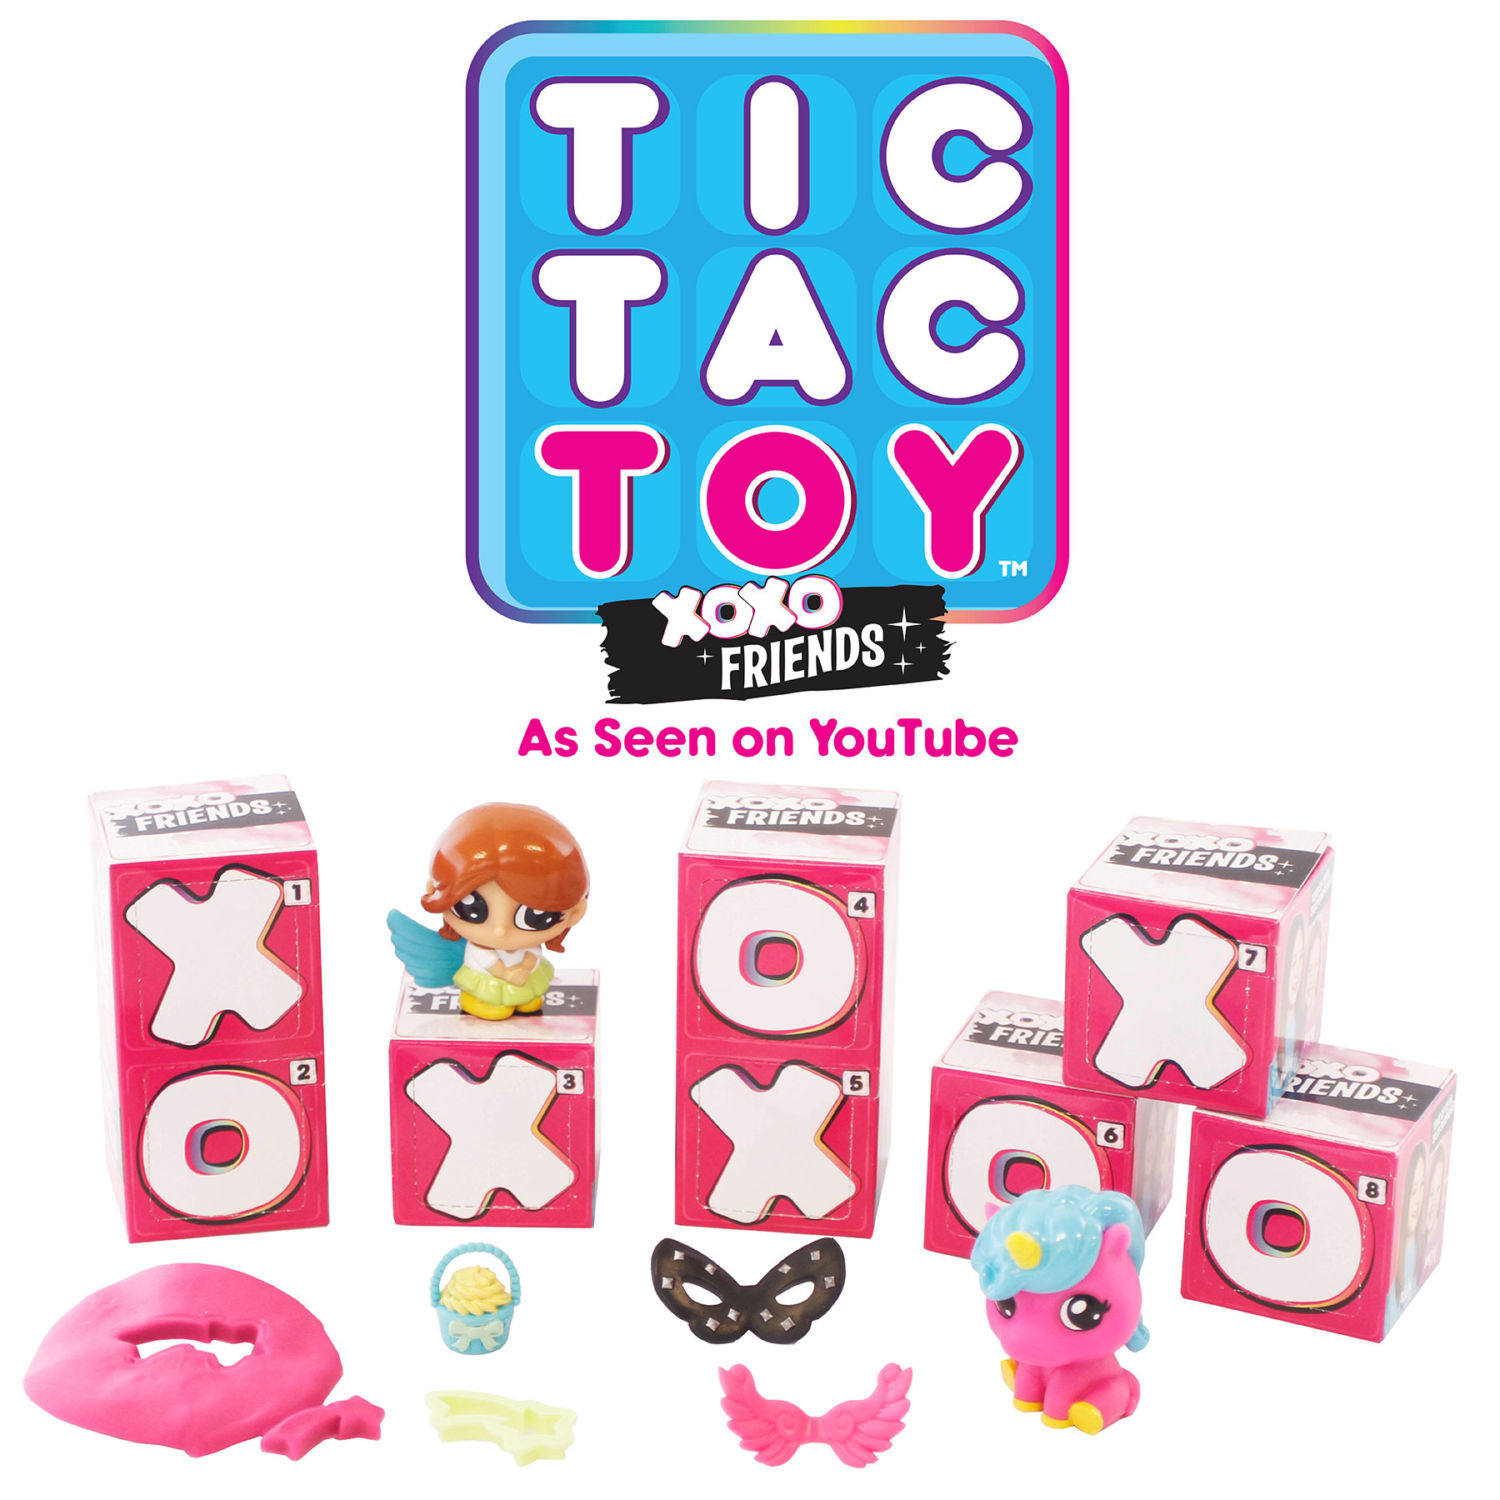 Tic Tac Toy XOXO Friends